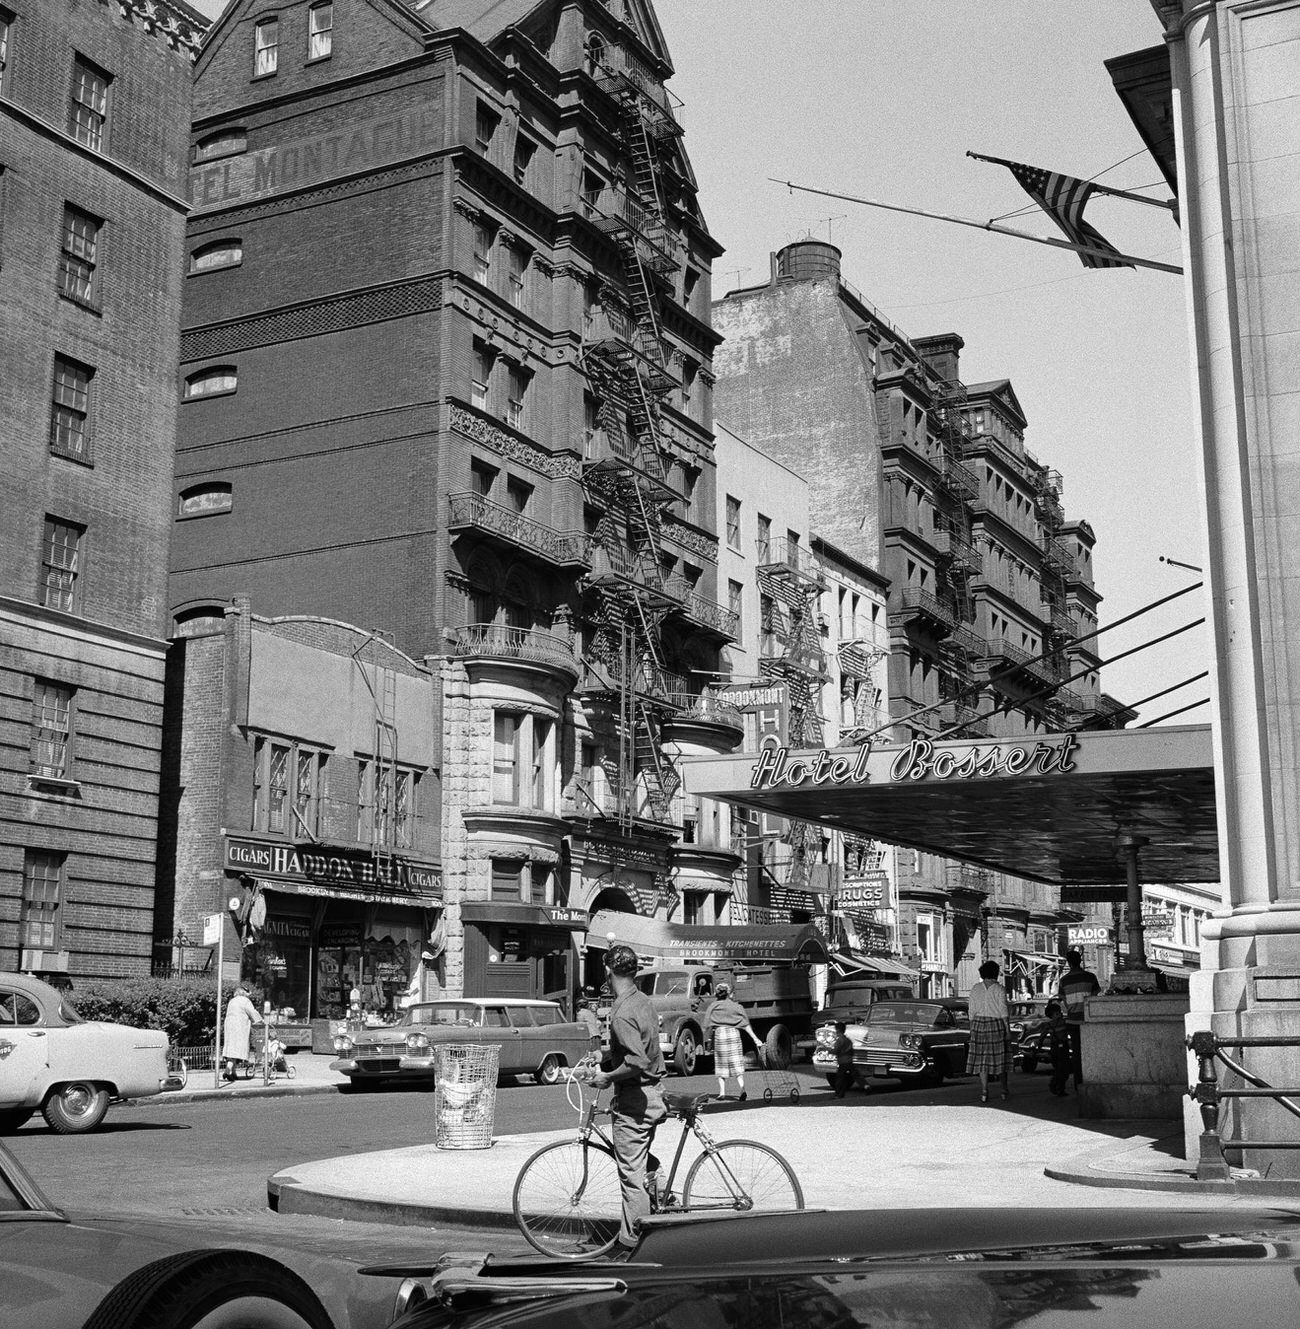 Hotel Bossert At 98 Montague Street In Brooklyn Heights, 1958.